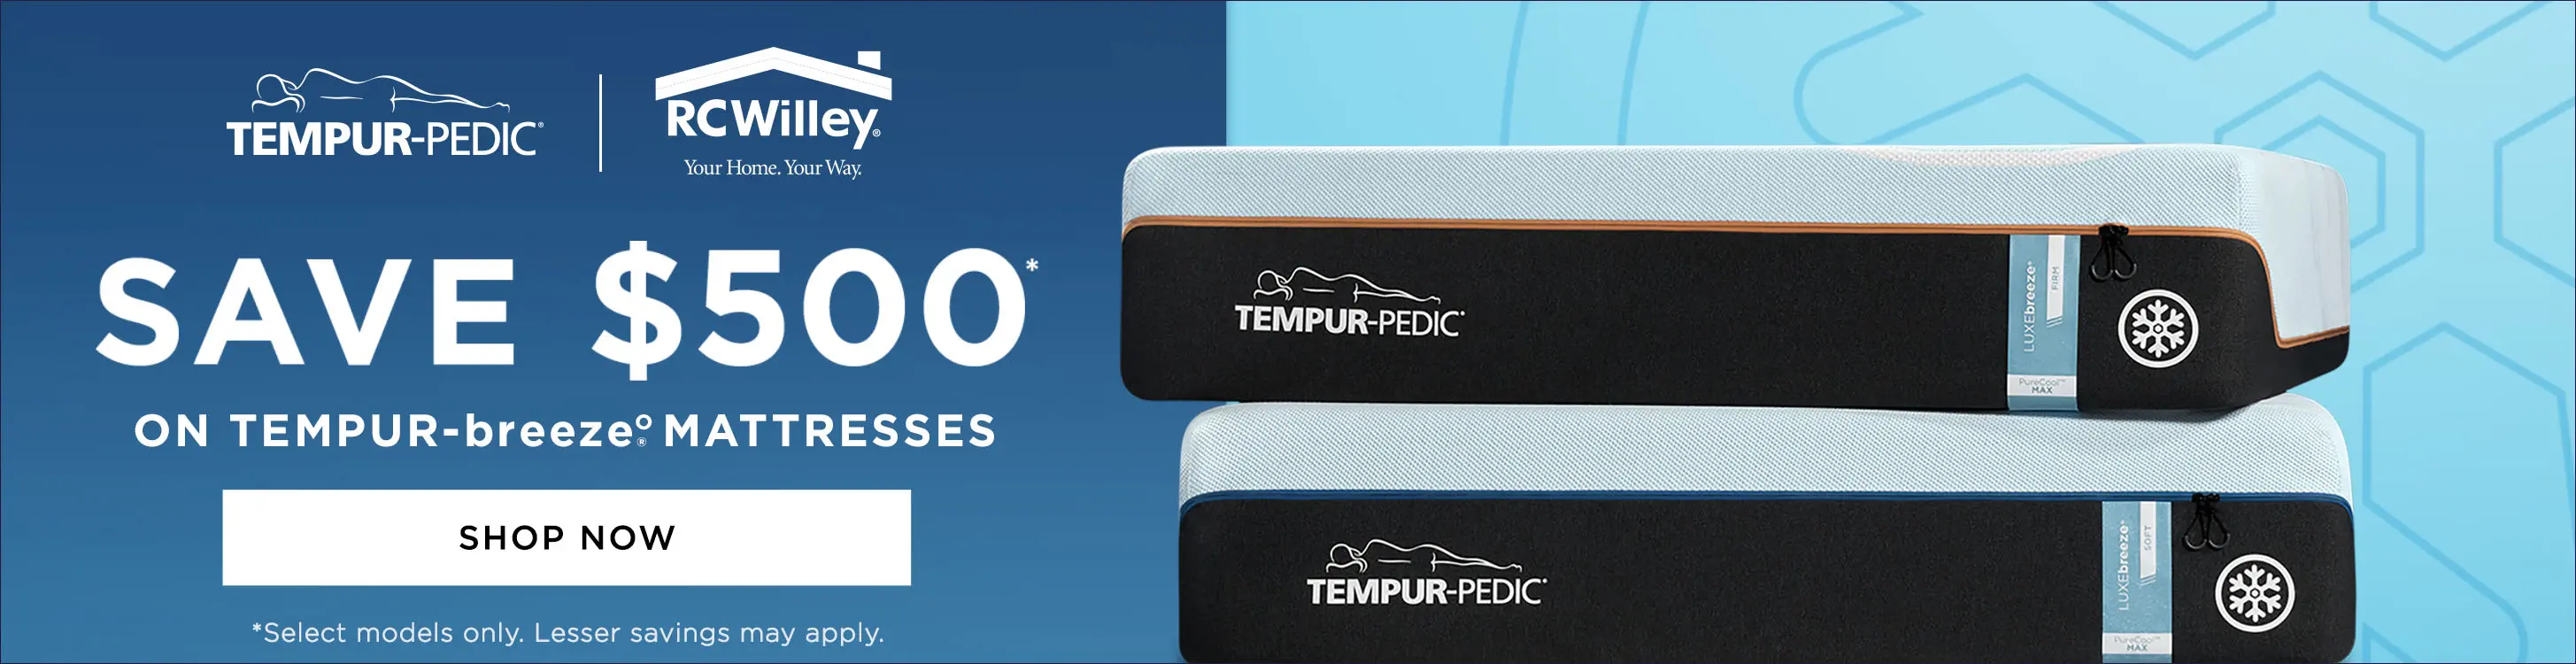 Save $500 on Select Tempur-Breeze Mattresses